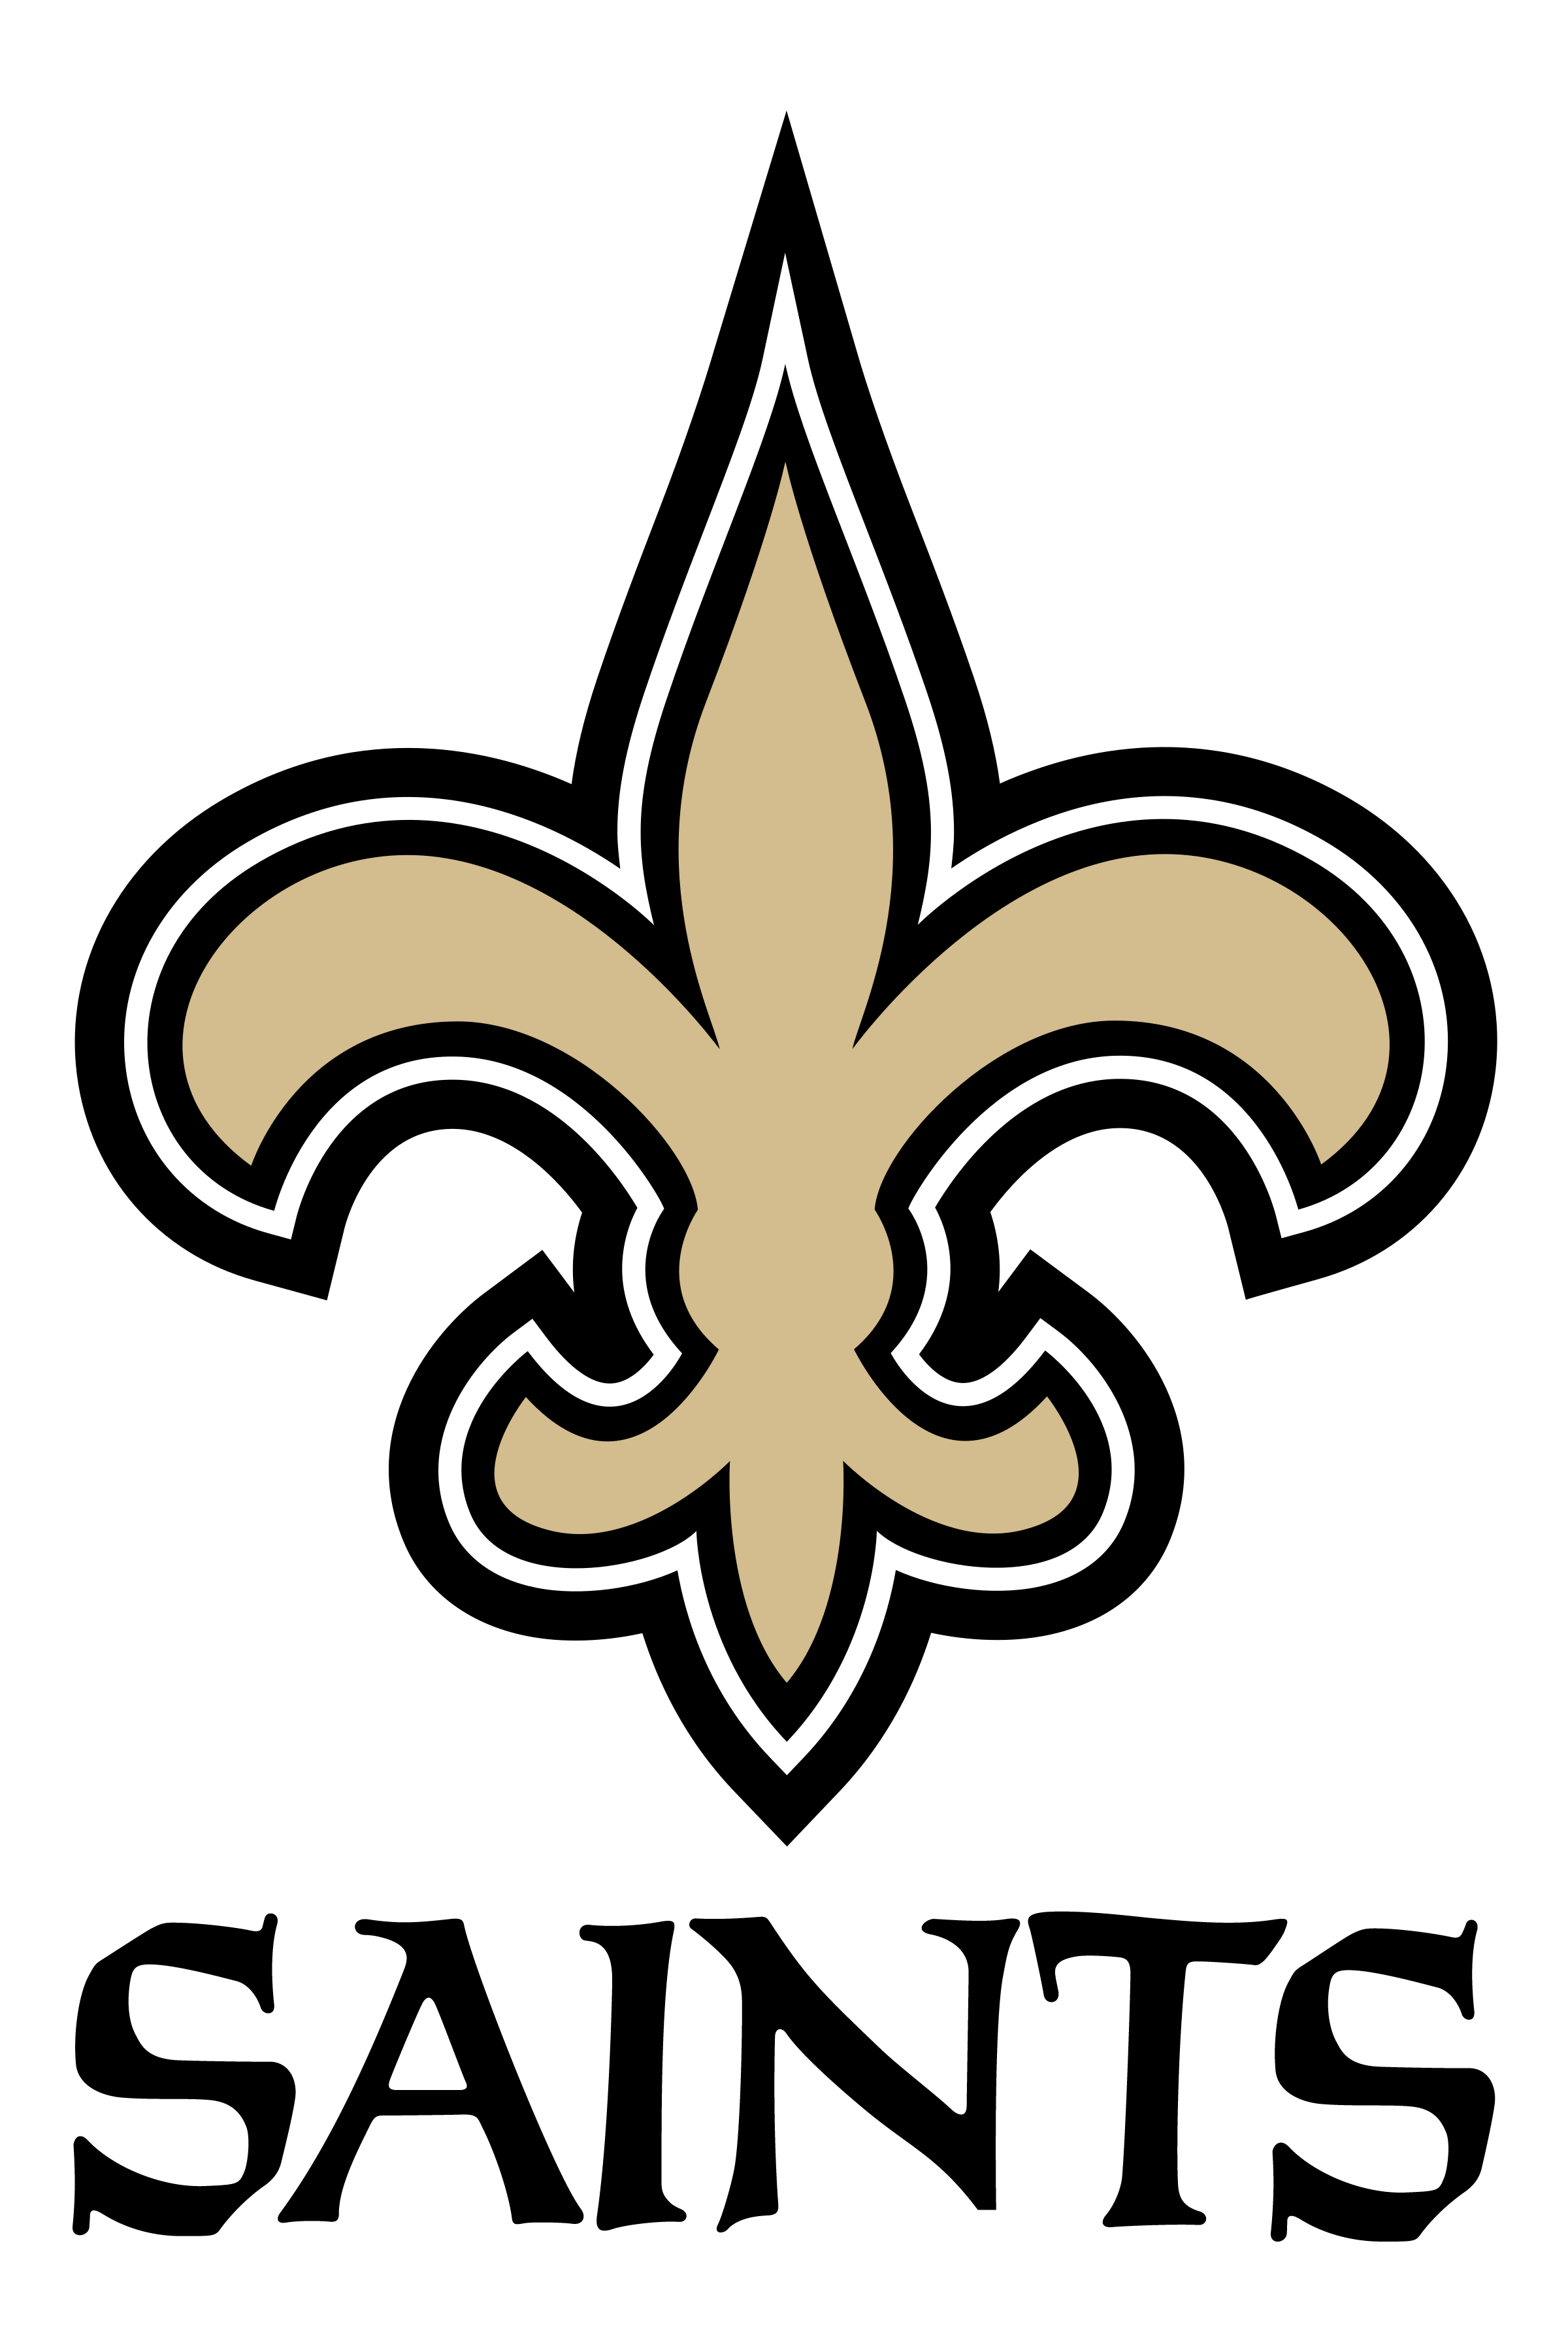 New Orleans Saints Logo - New Orleans Saints Logo PNG Transparent & SVG Vector - Freebie Supply